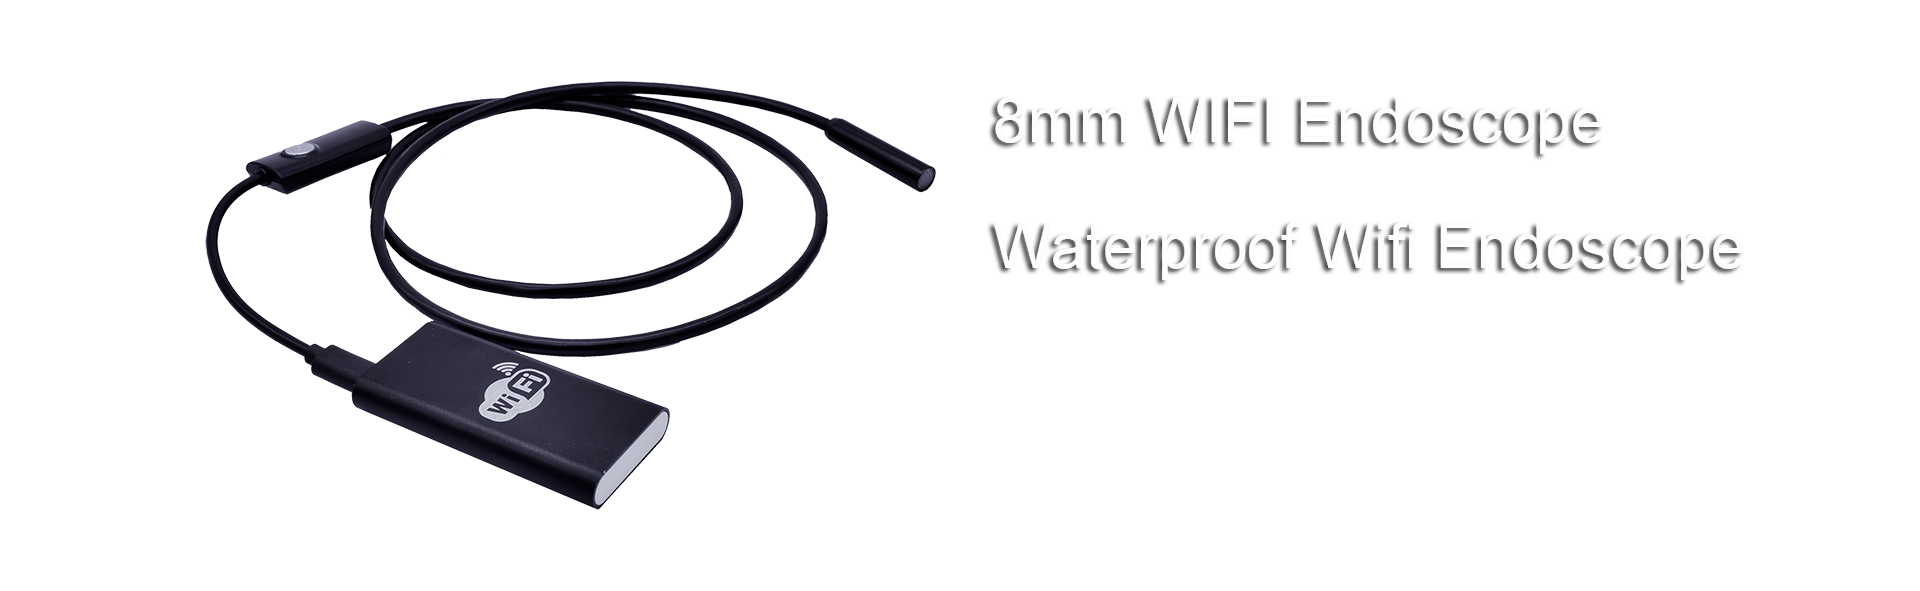 8mm WIFI Endoscope